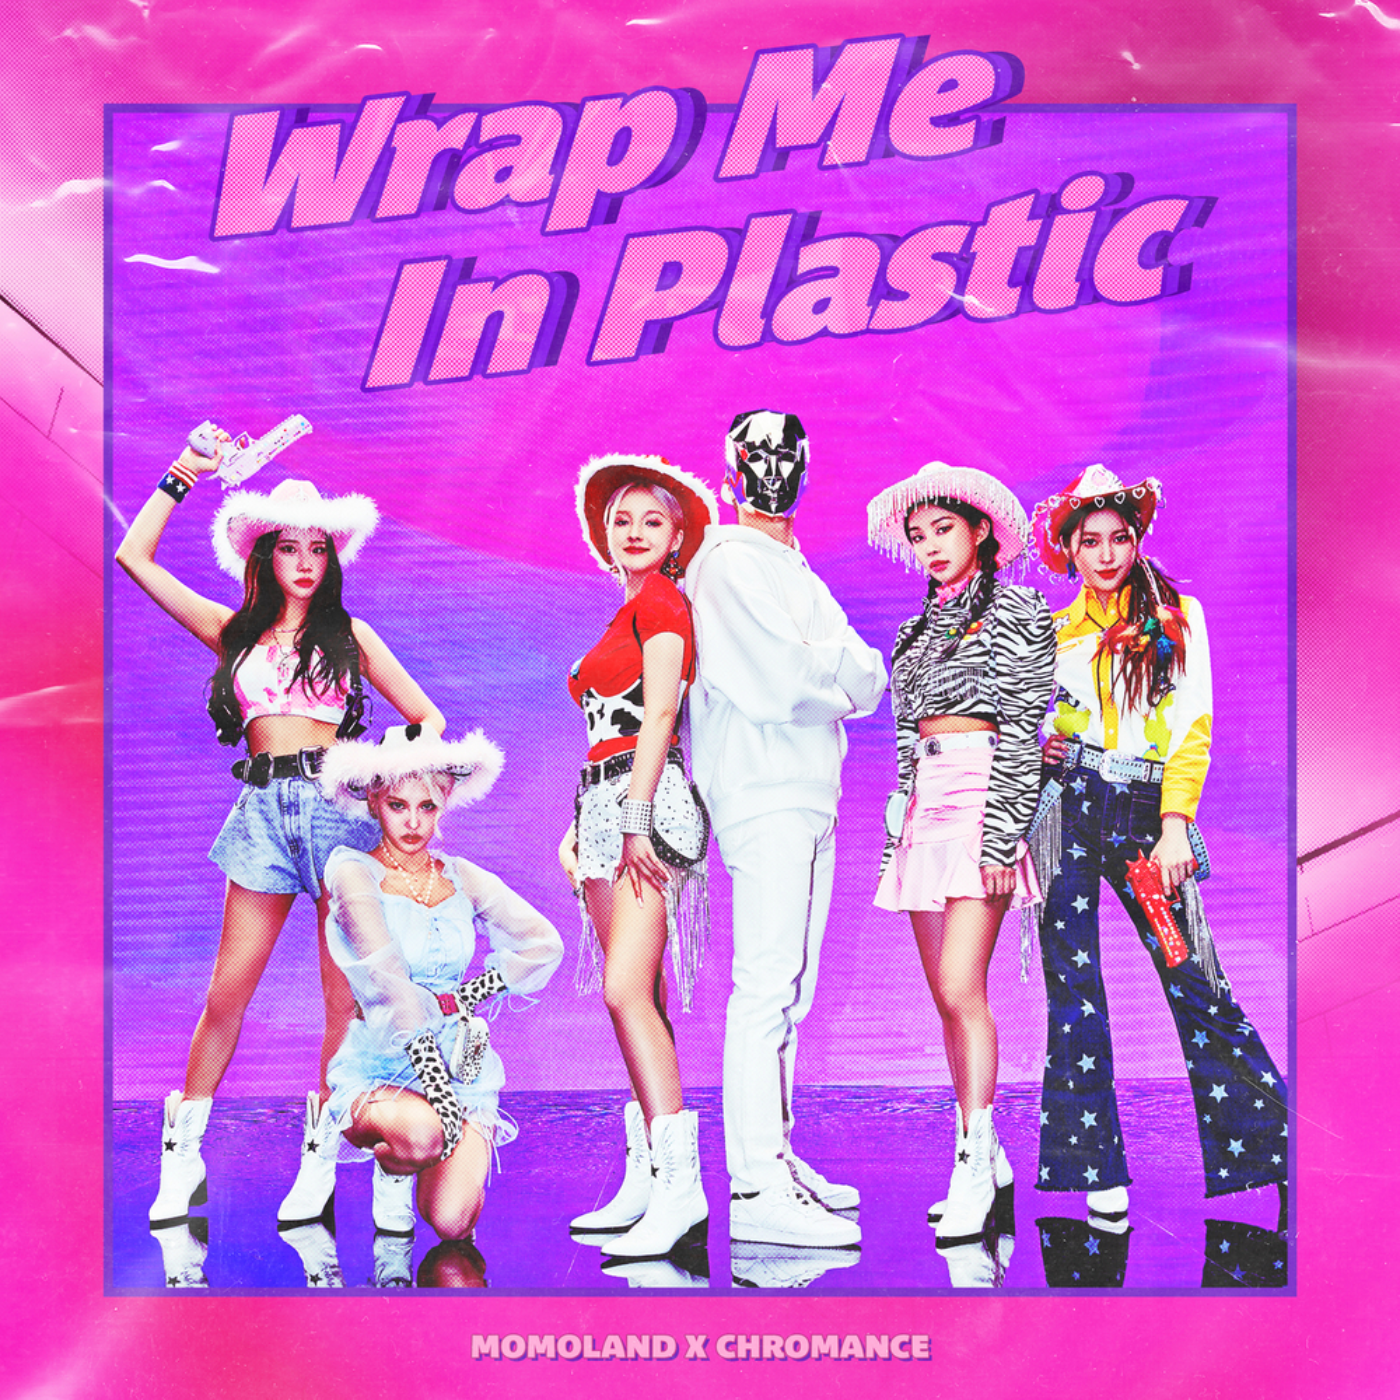 Plastic wrap - Wikipedia